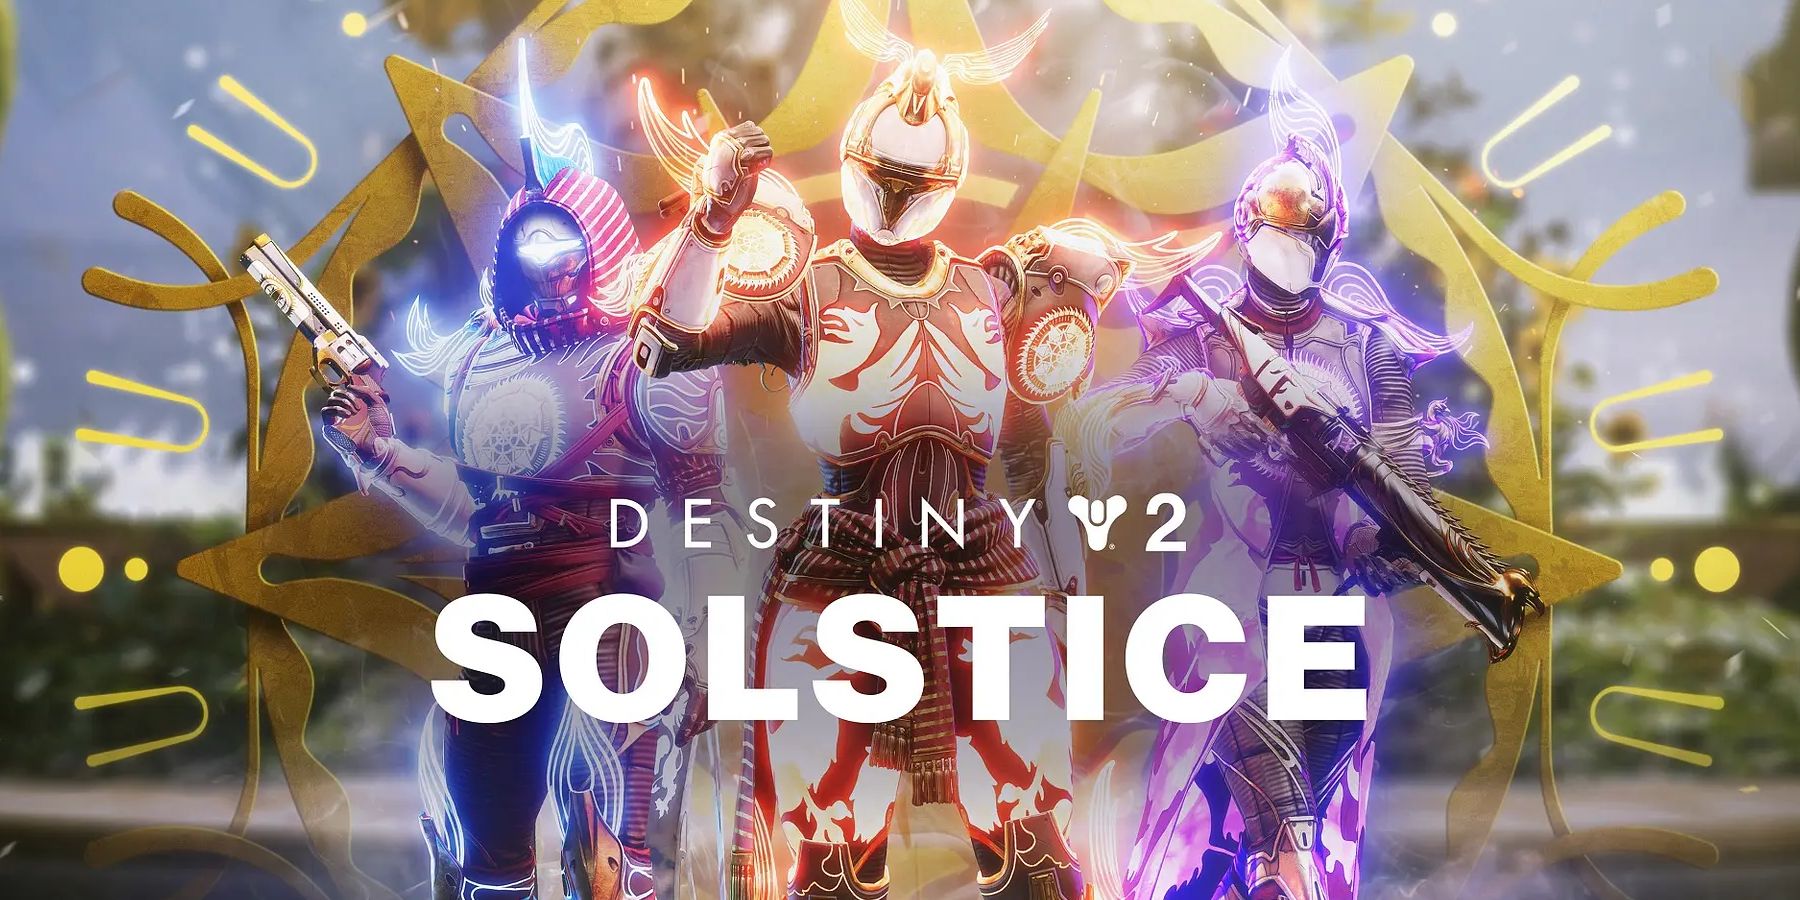 Destiny 2 Solstice Armor Glows